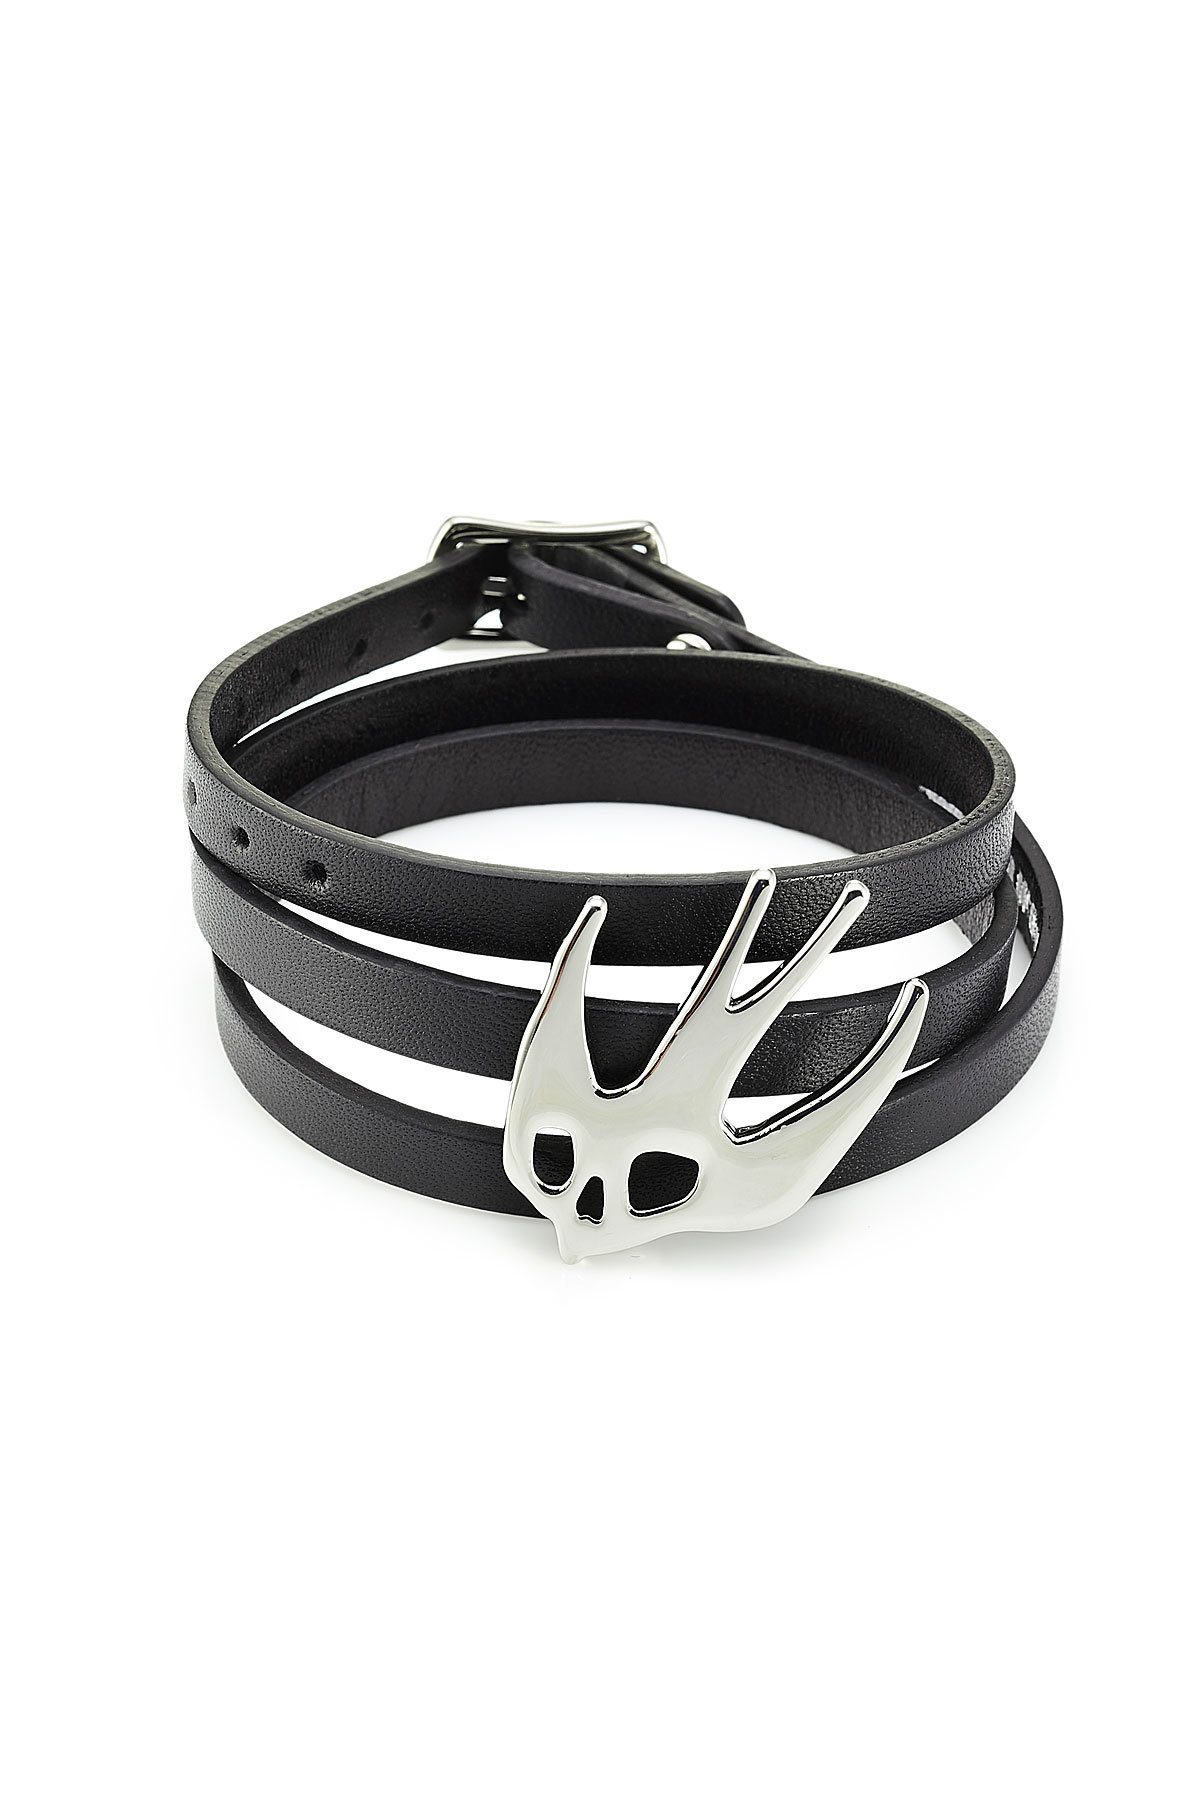 McQ Alexander McQueen - Swallow Wrap Leather Bracelet